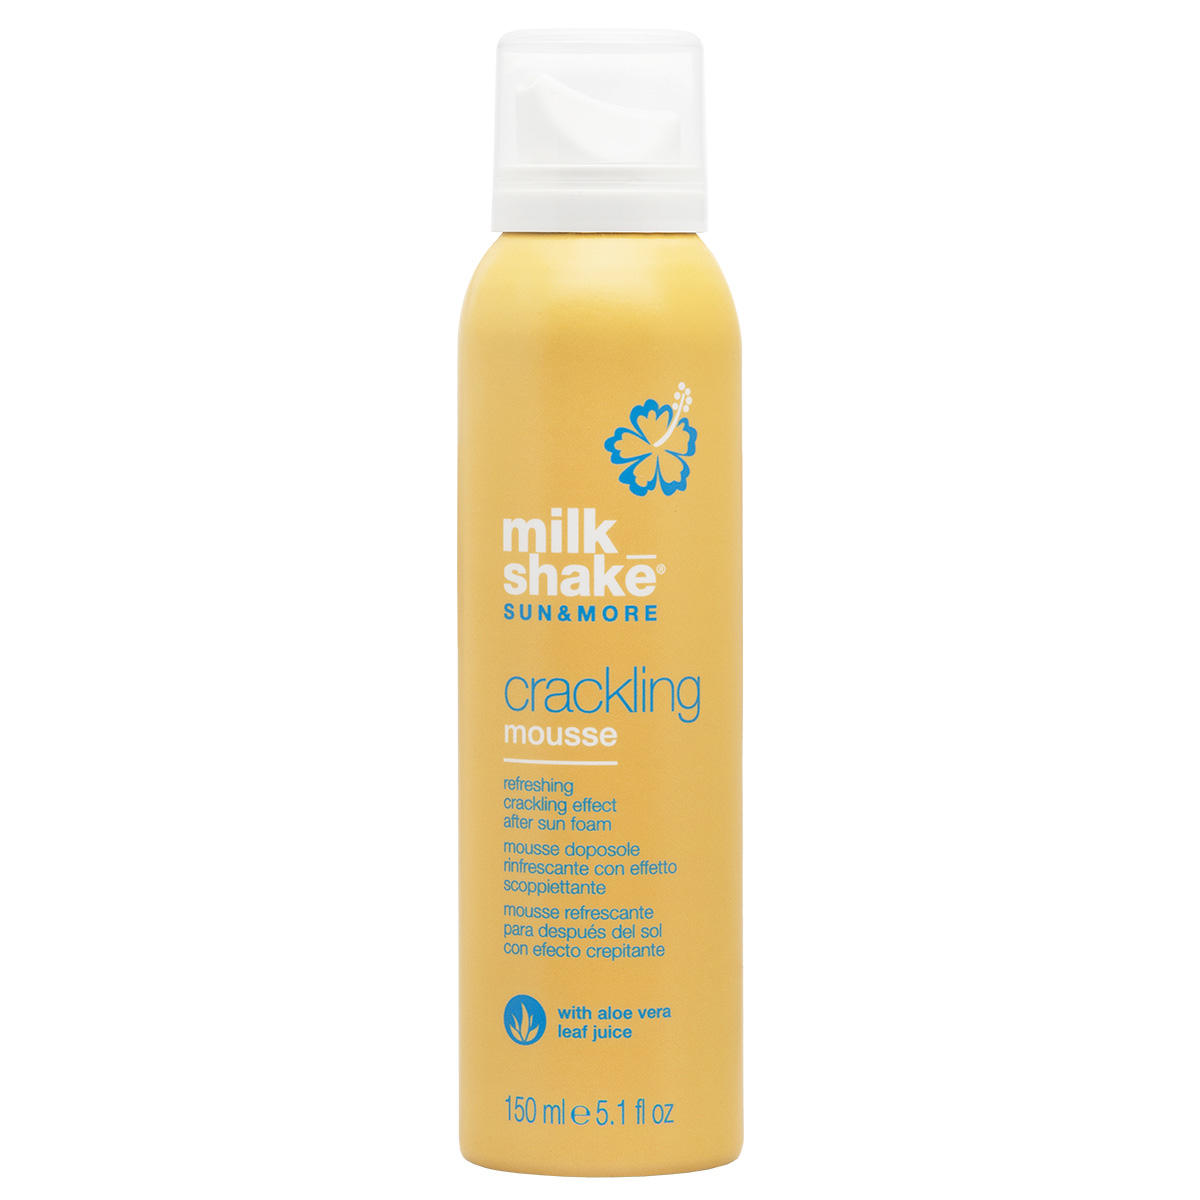 milk_shake Sun&More Crackling Mousse 150 ml - 1